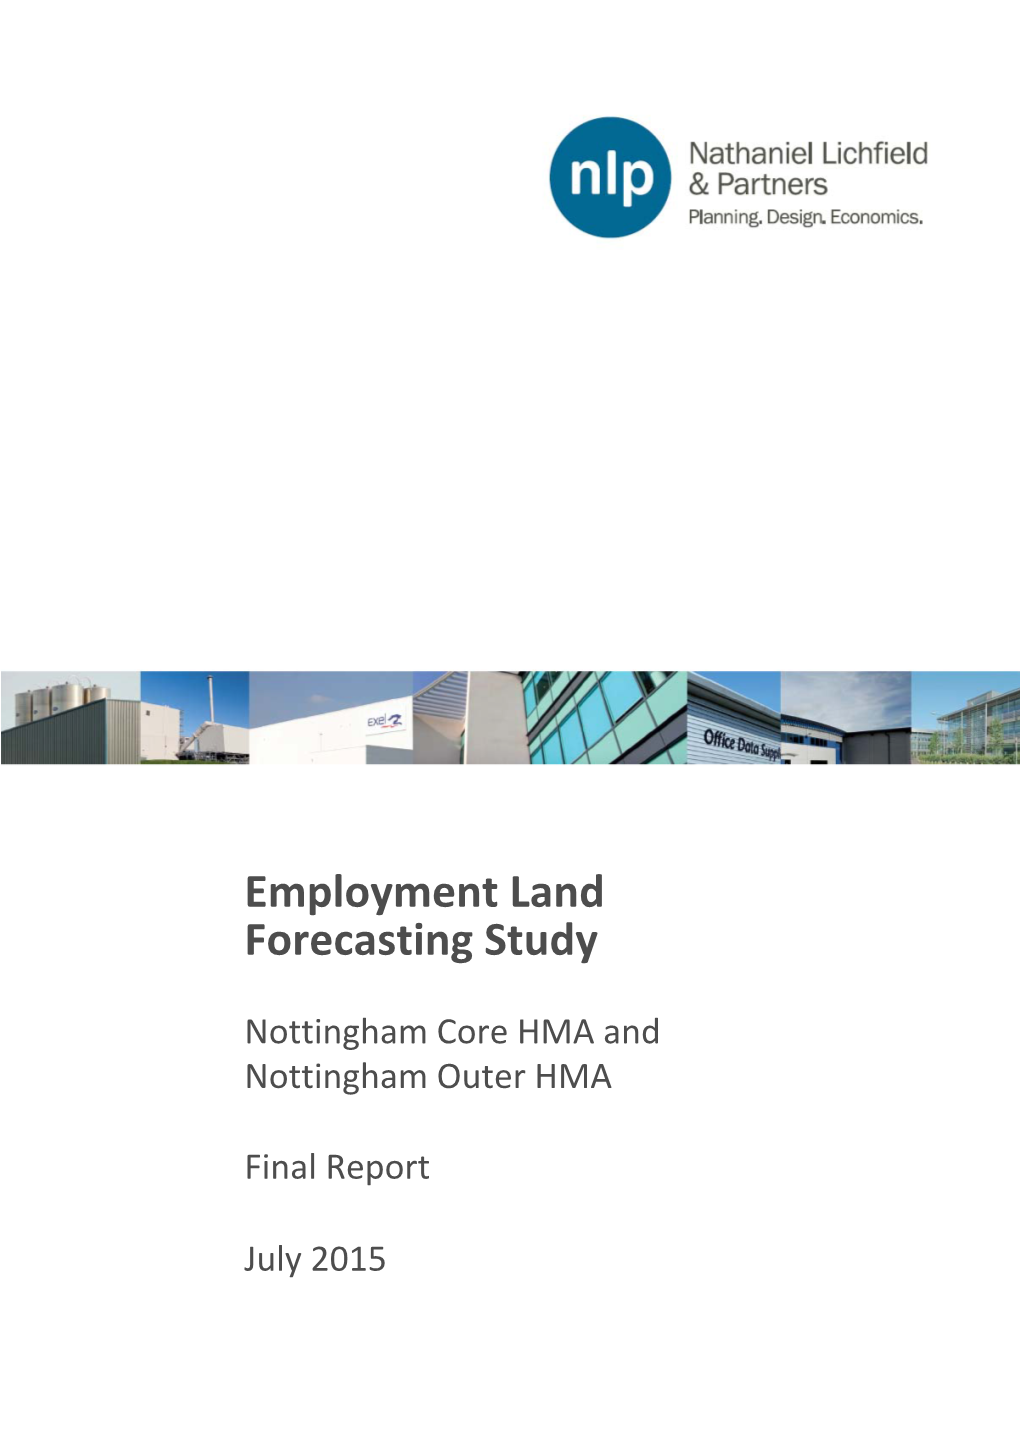 2015 Employment Land Forecasting Study